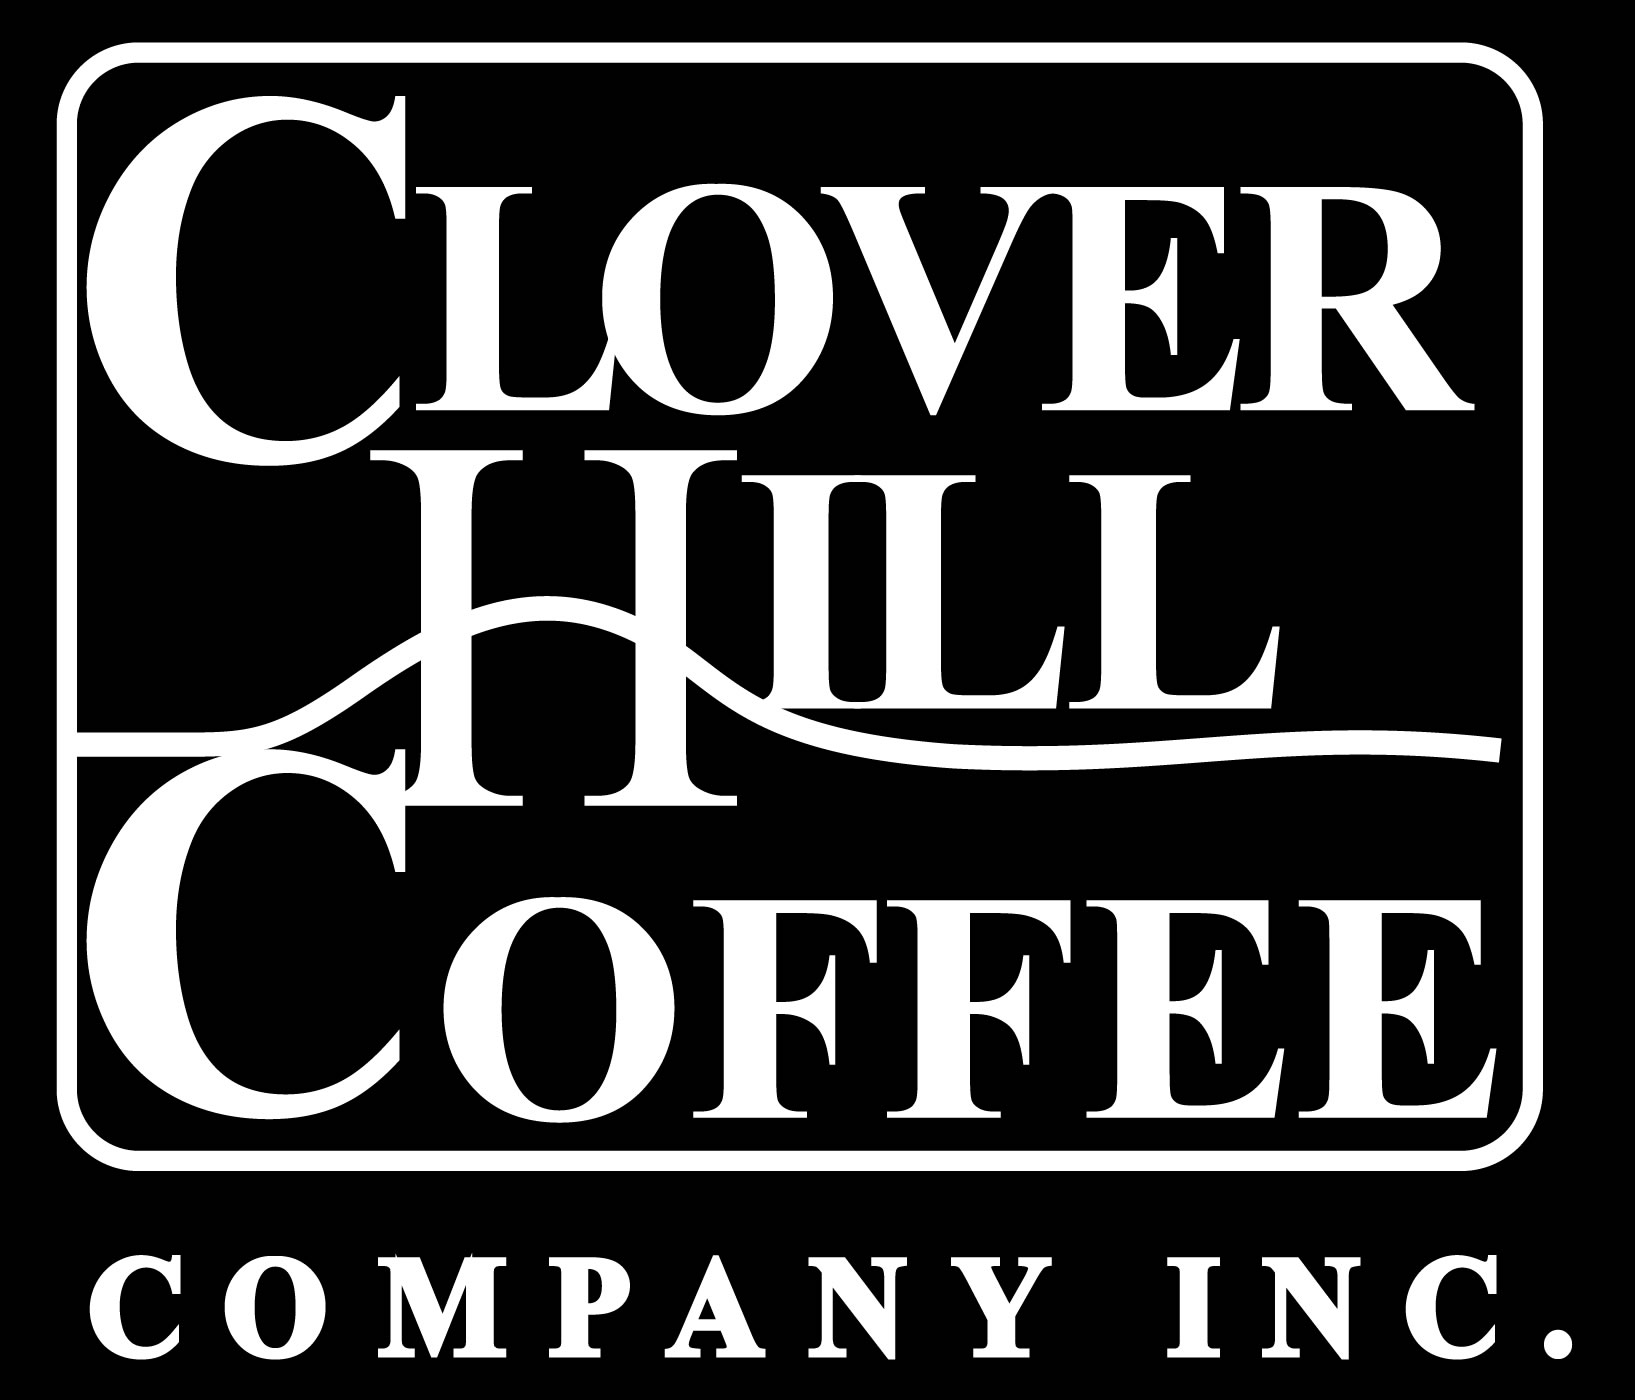 CHC COLD BREW REGULAR COFFEE
6/5LB BAGS